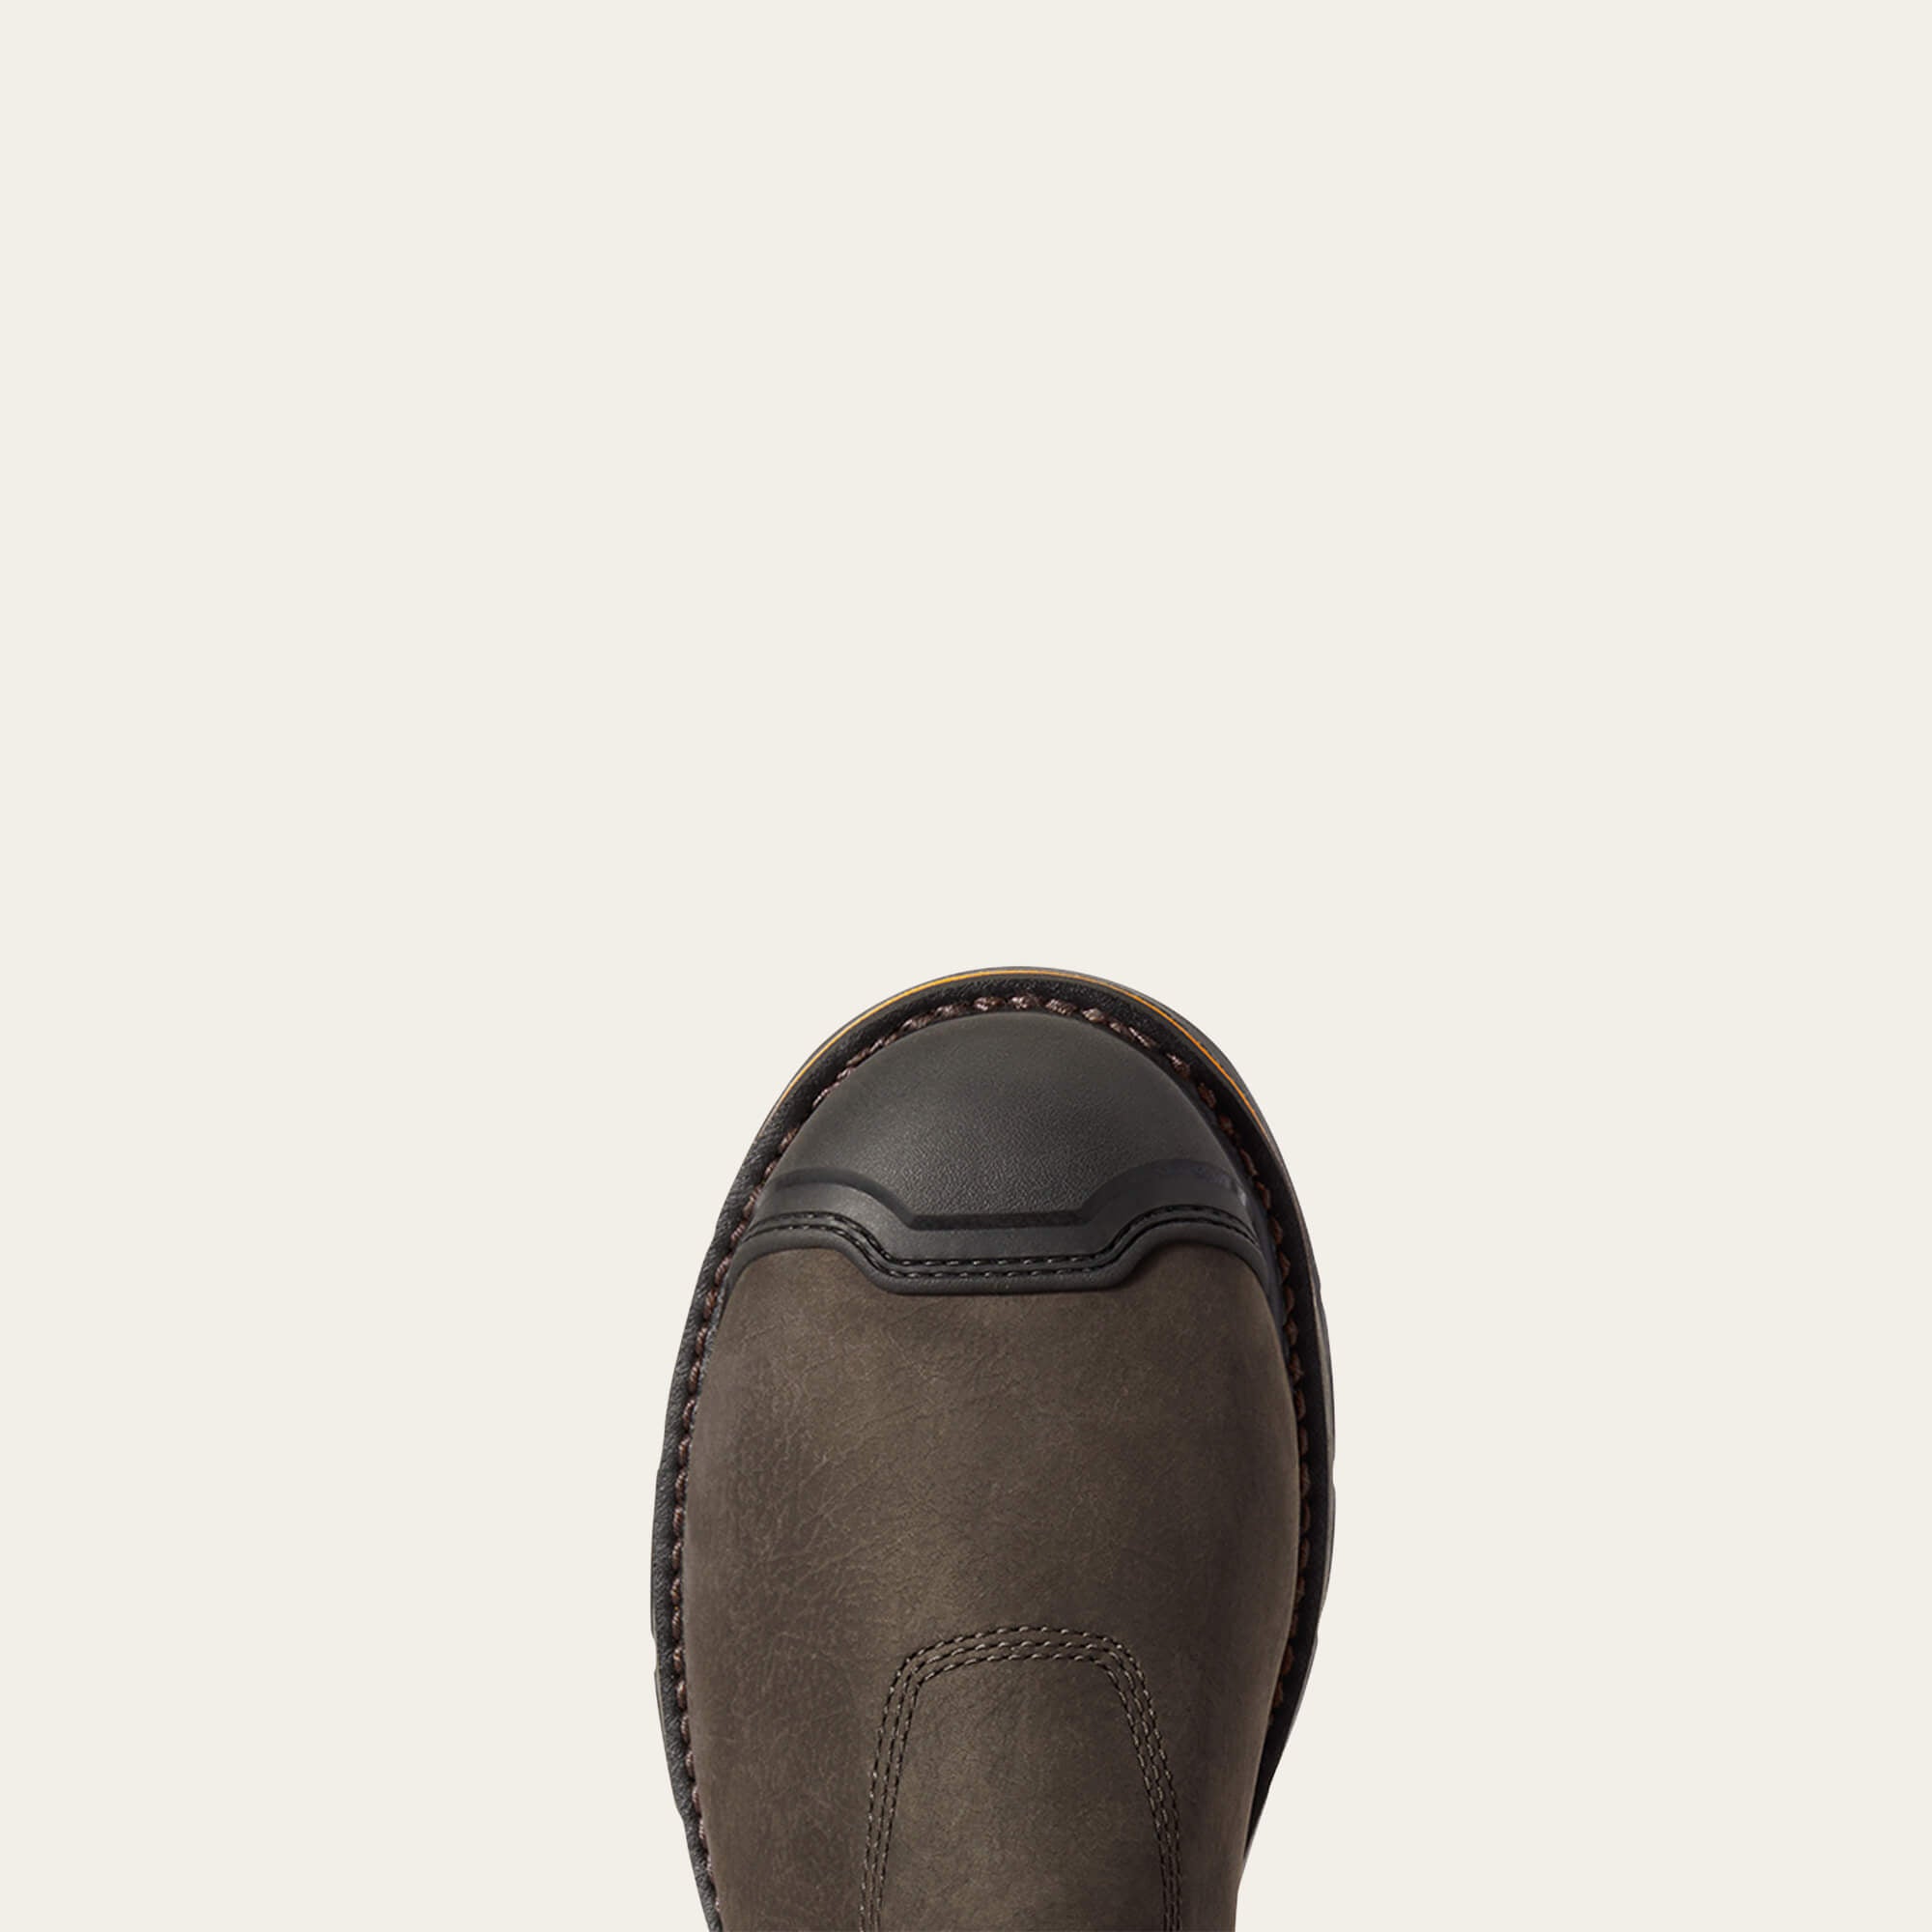 Ariat Men's Stump Jumper Pull On Comp Toe WP Work Boot - Iron Coffee - 10038282  - Overlook Boots